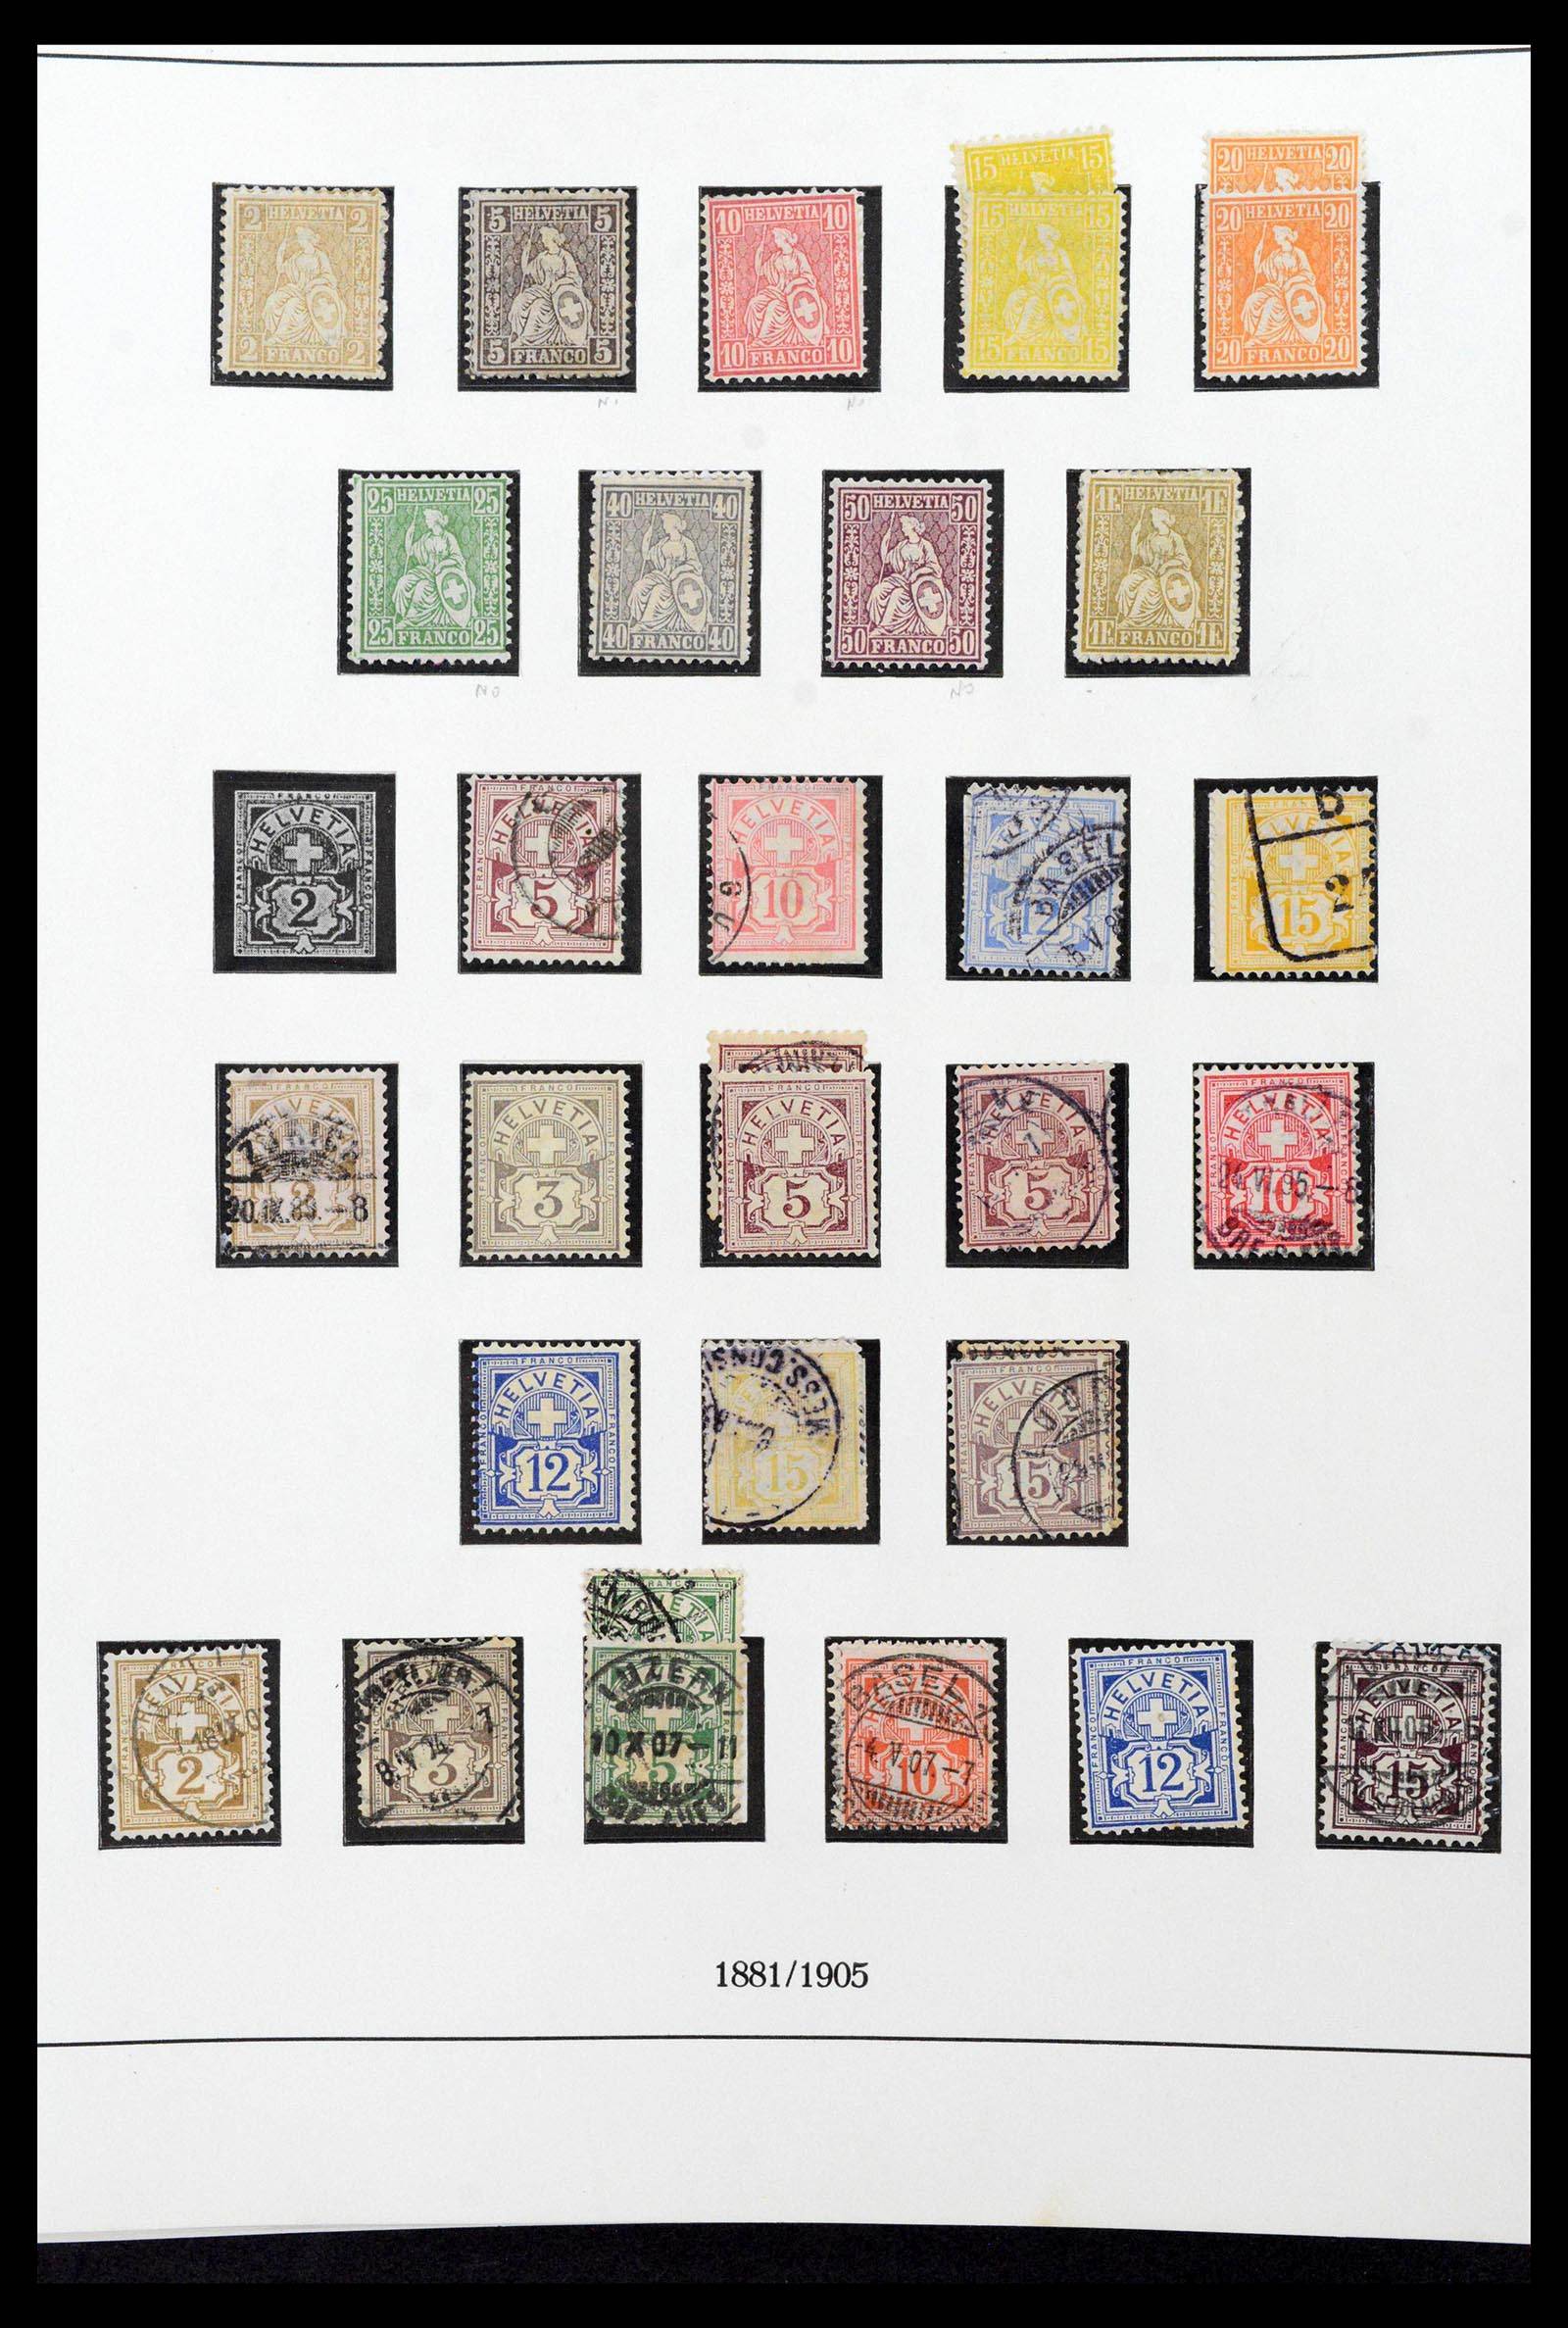 39235 0007 - Stamp collection 39235 Switzerland 1843-1960.